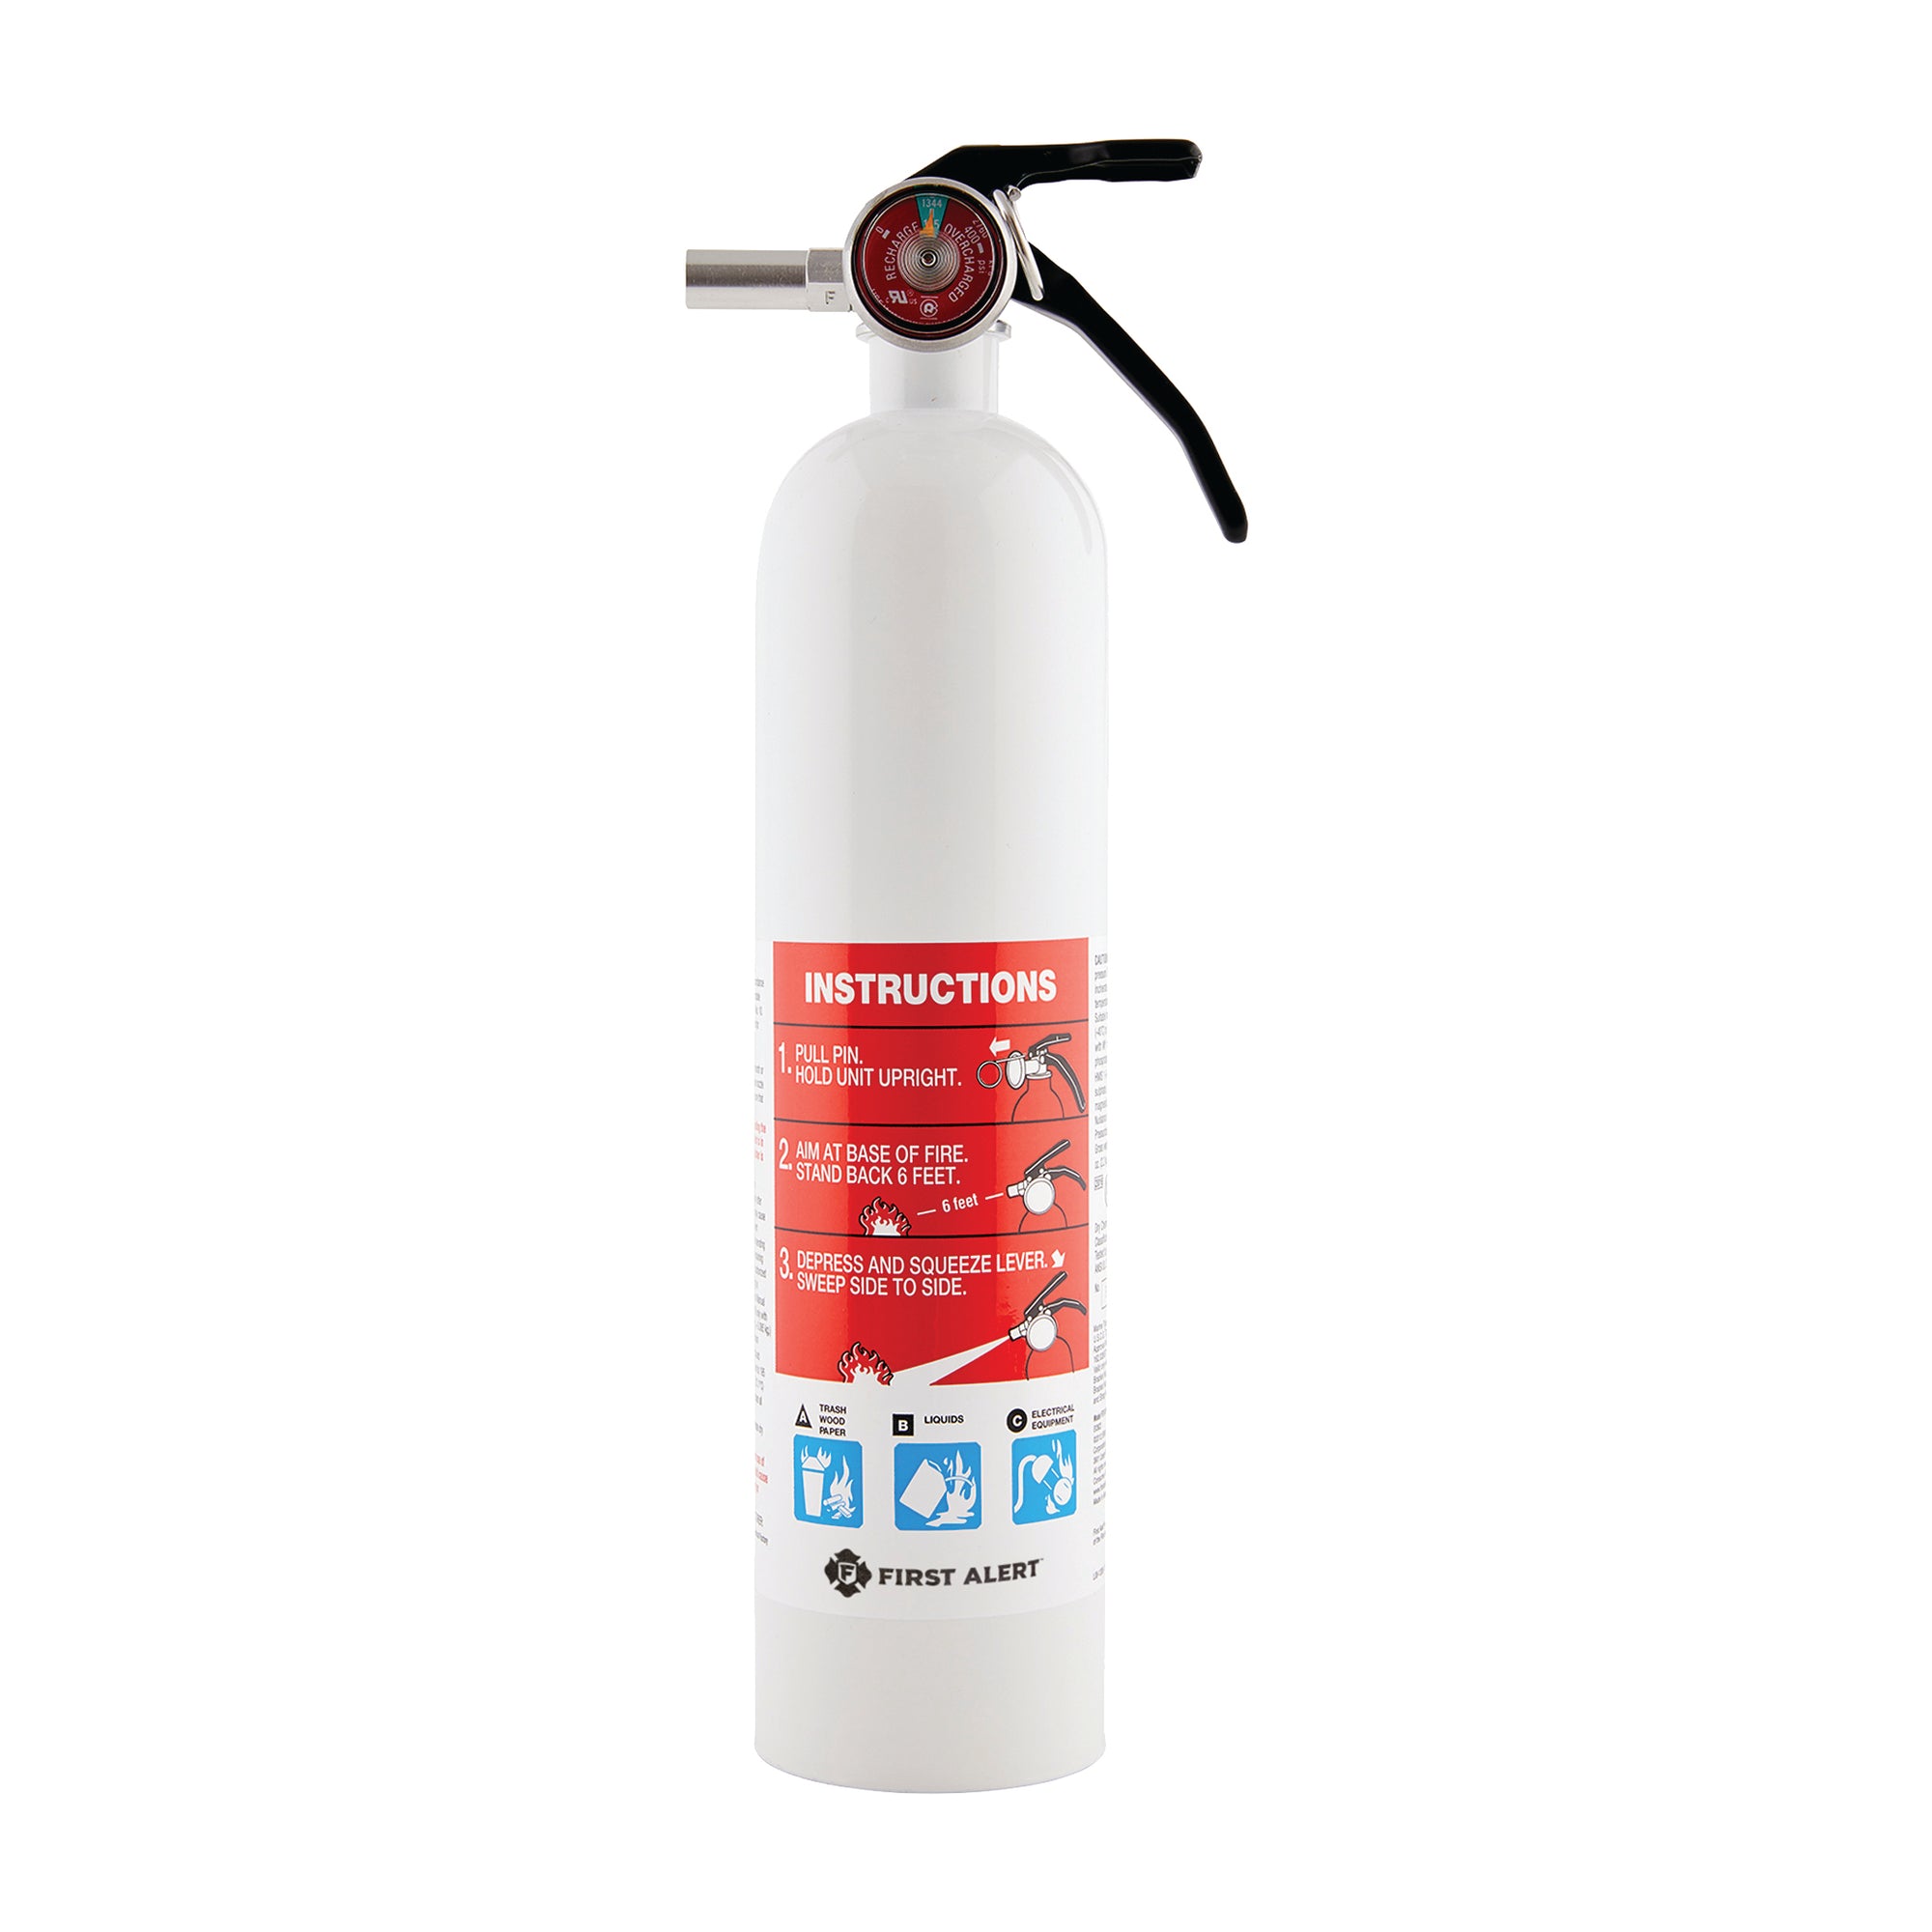 First Alert FE1A10GOWA General Purpose Fire Extinguisher 1-A:10-B:C - White